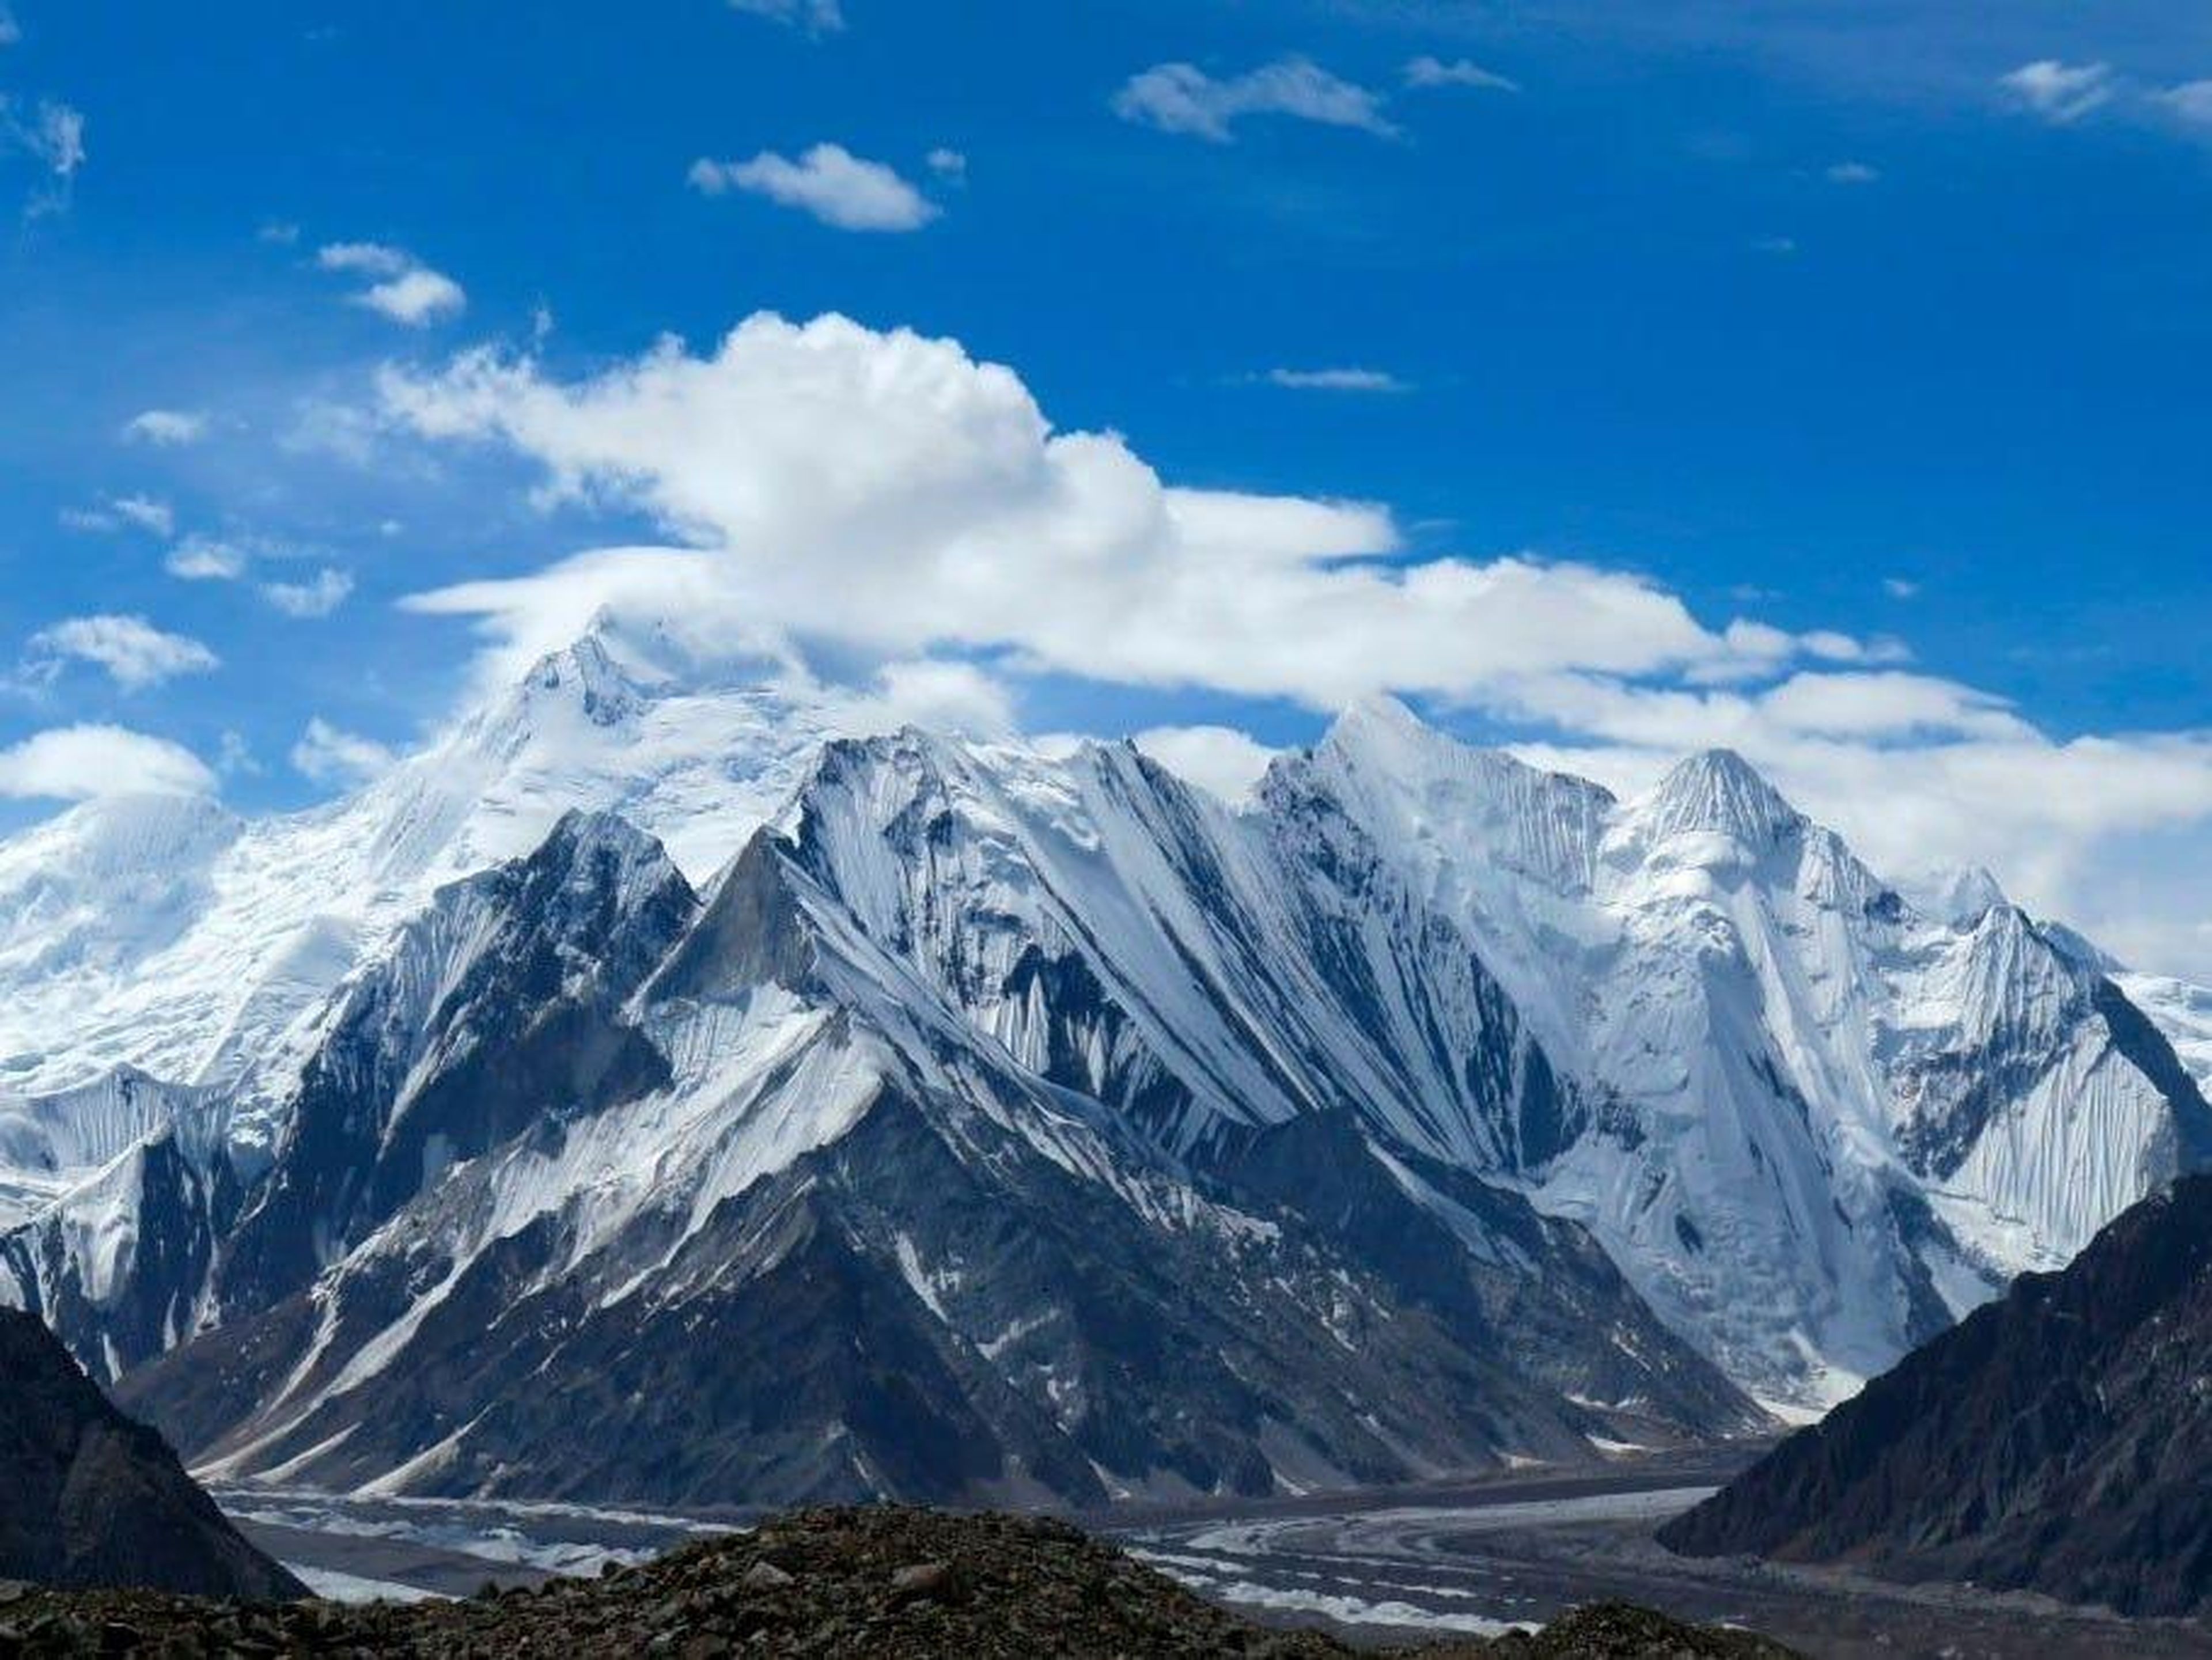 La cadena montañosa del Karakoram atrae a osados montañistas atraídos por los desafiantes picos.